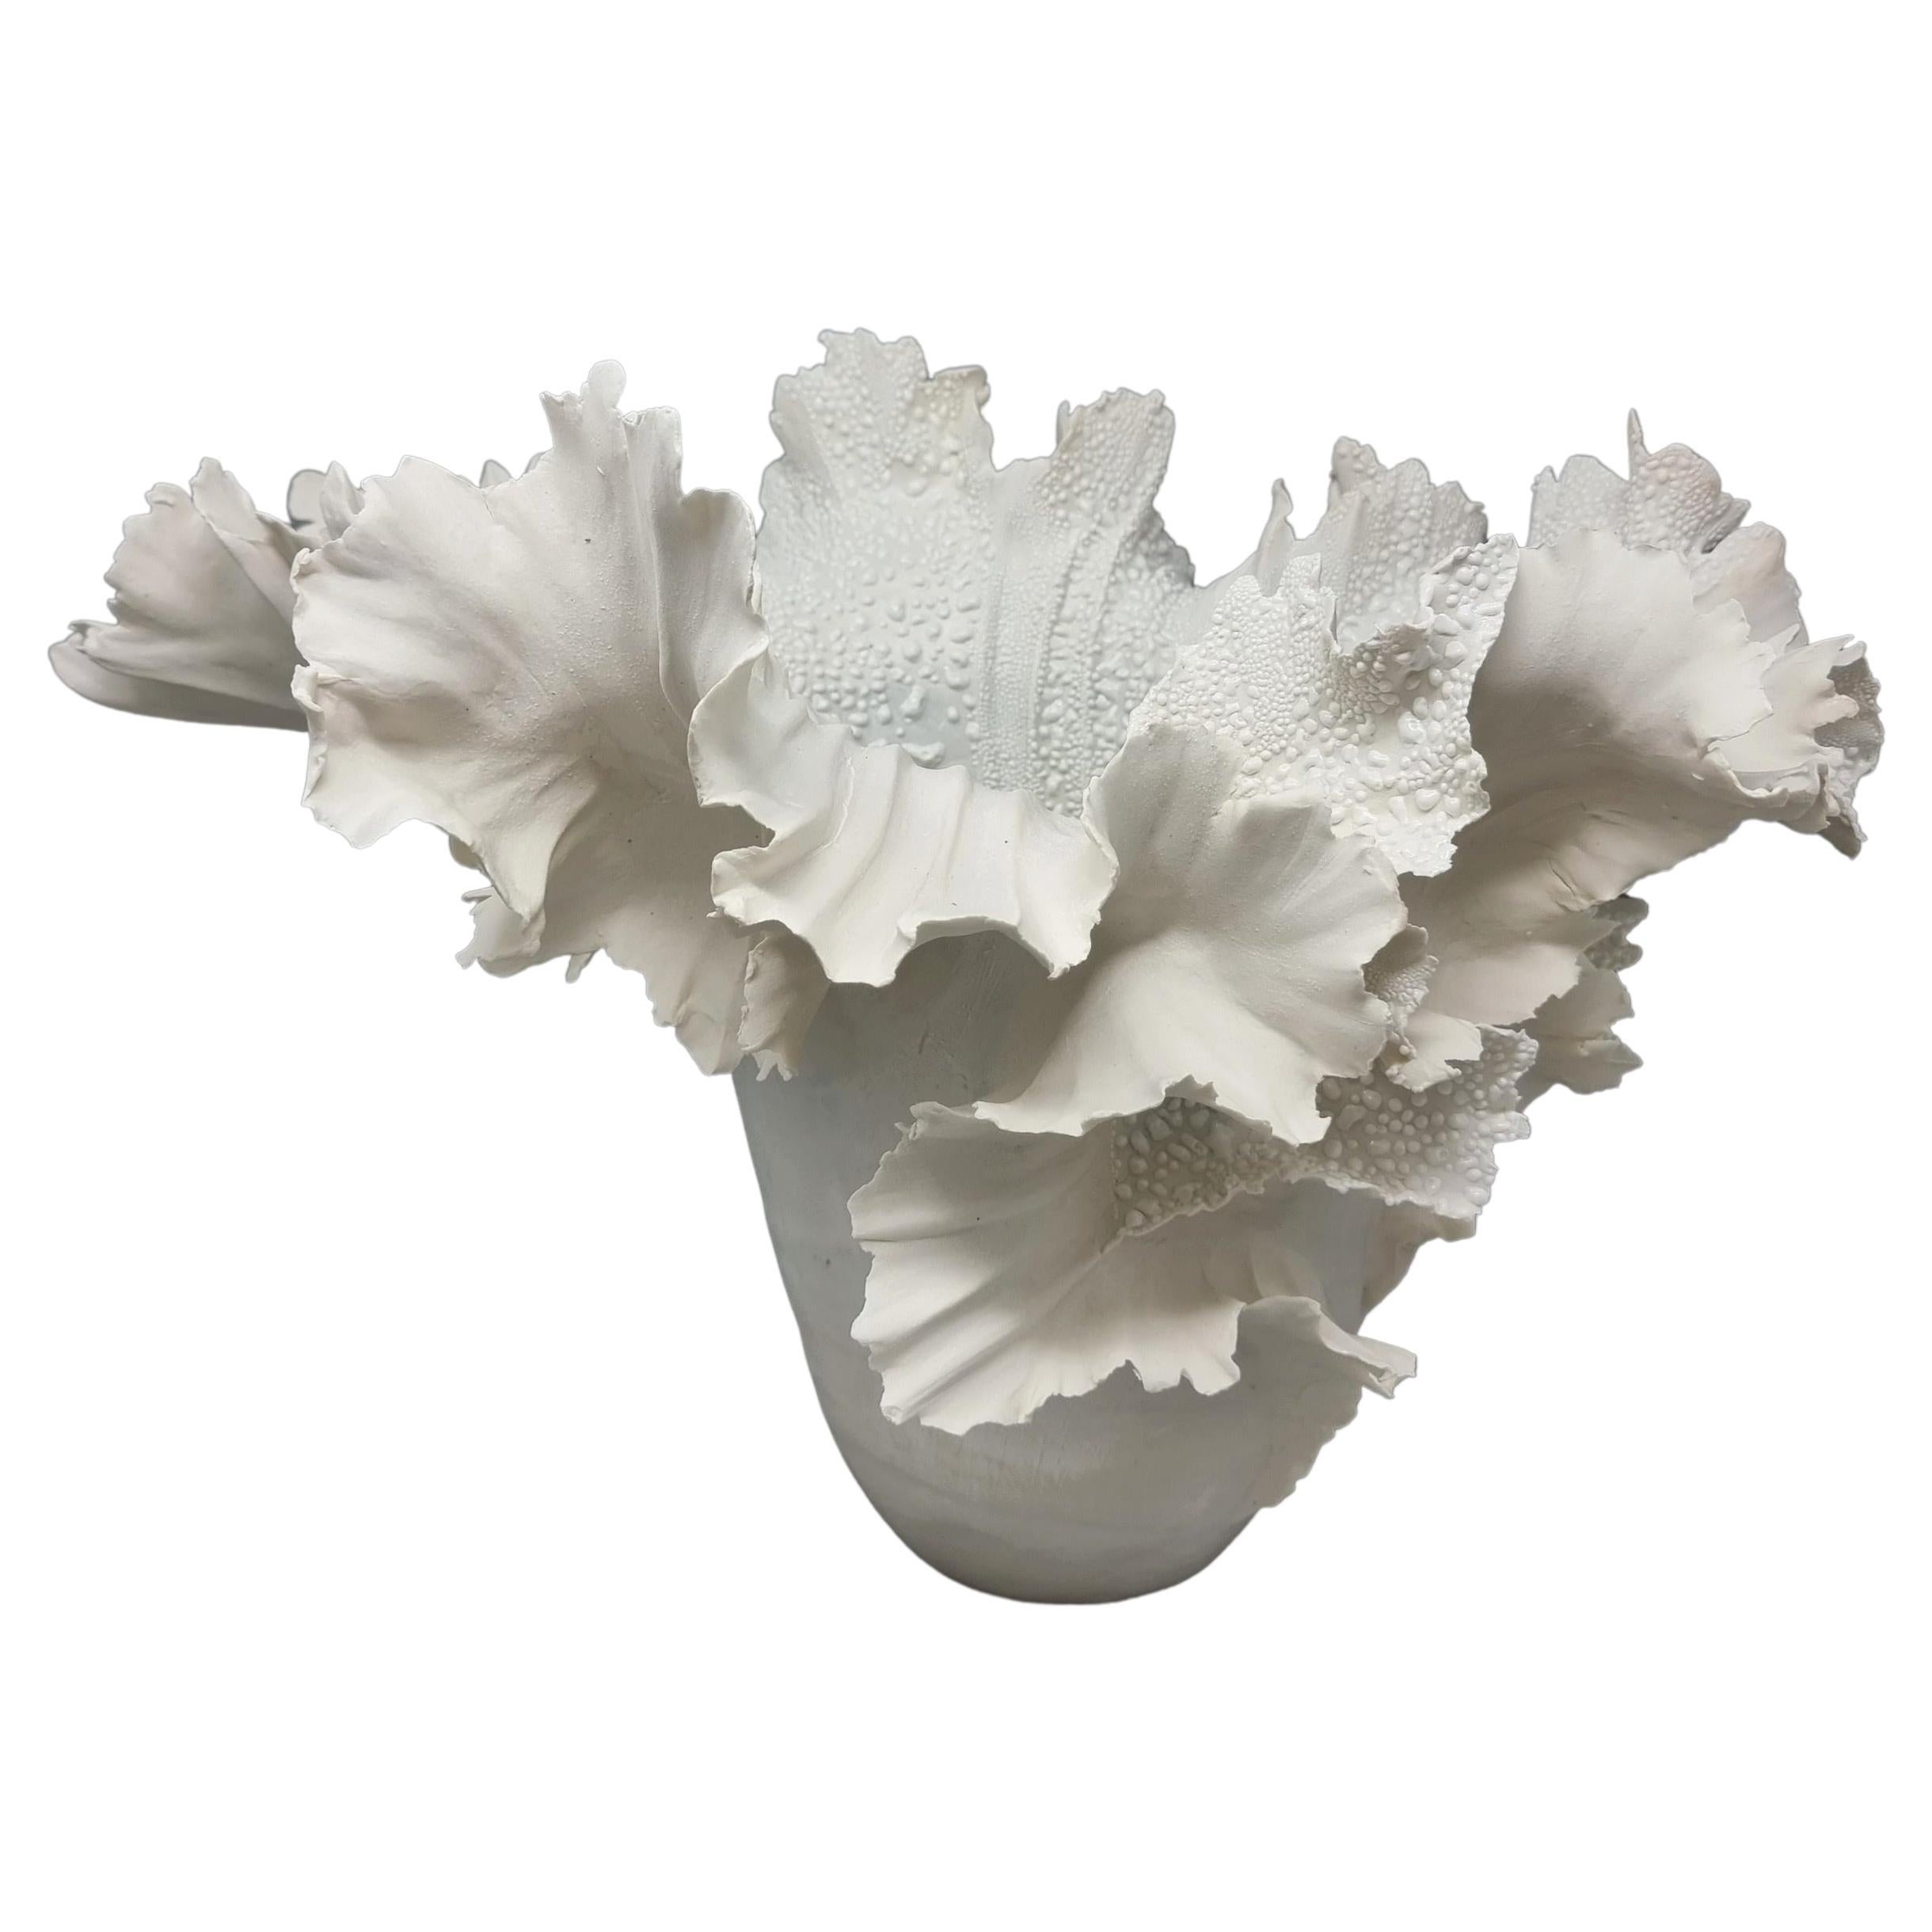 Handbuilt Paperporcelain Sculpture // Wave 146